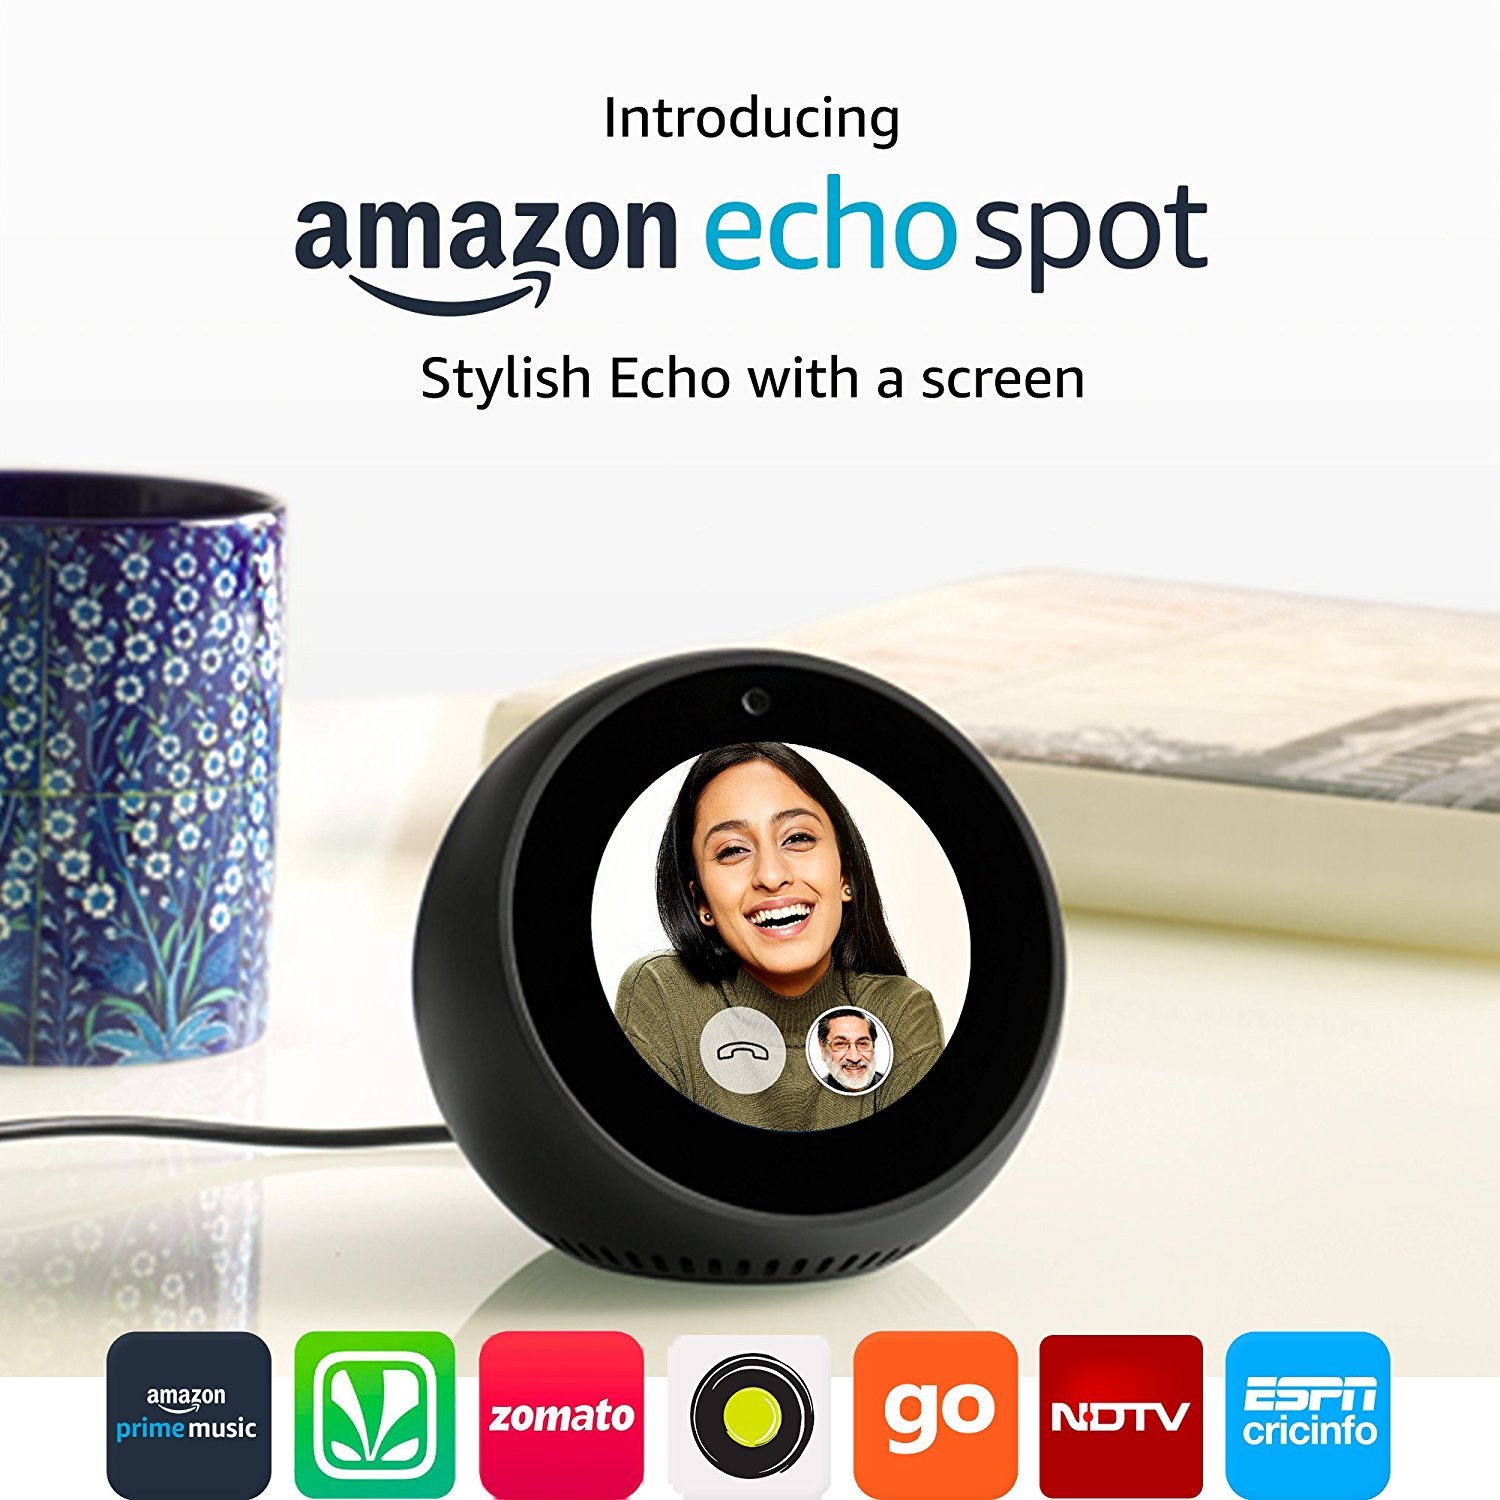 Amazon Echo Spot makes its way to India